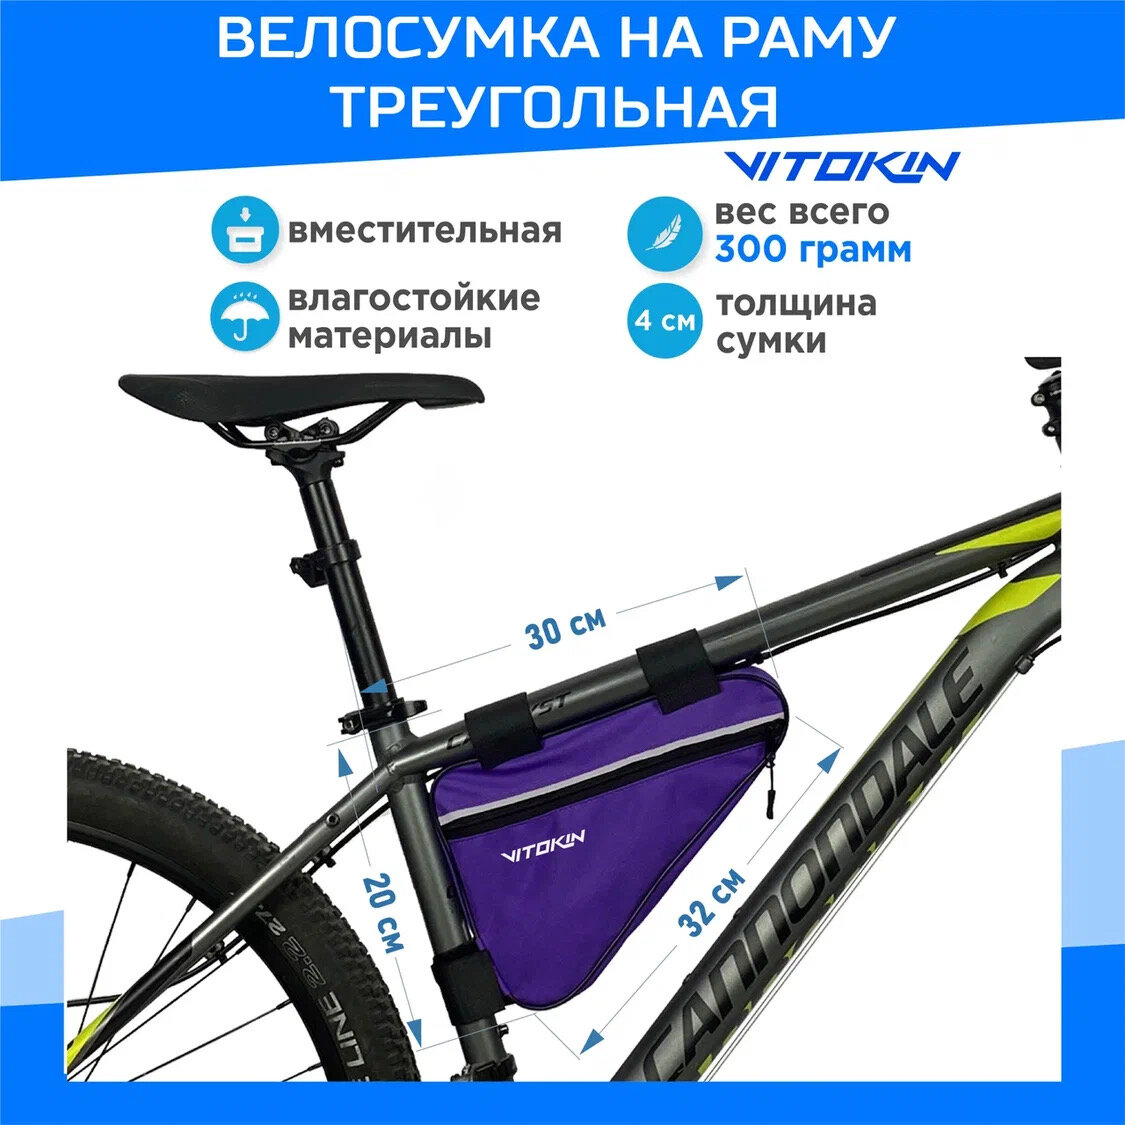 Велосумка под раму велосипеда, сумка велосипедная треугольная VITOKIN, фиолетовая